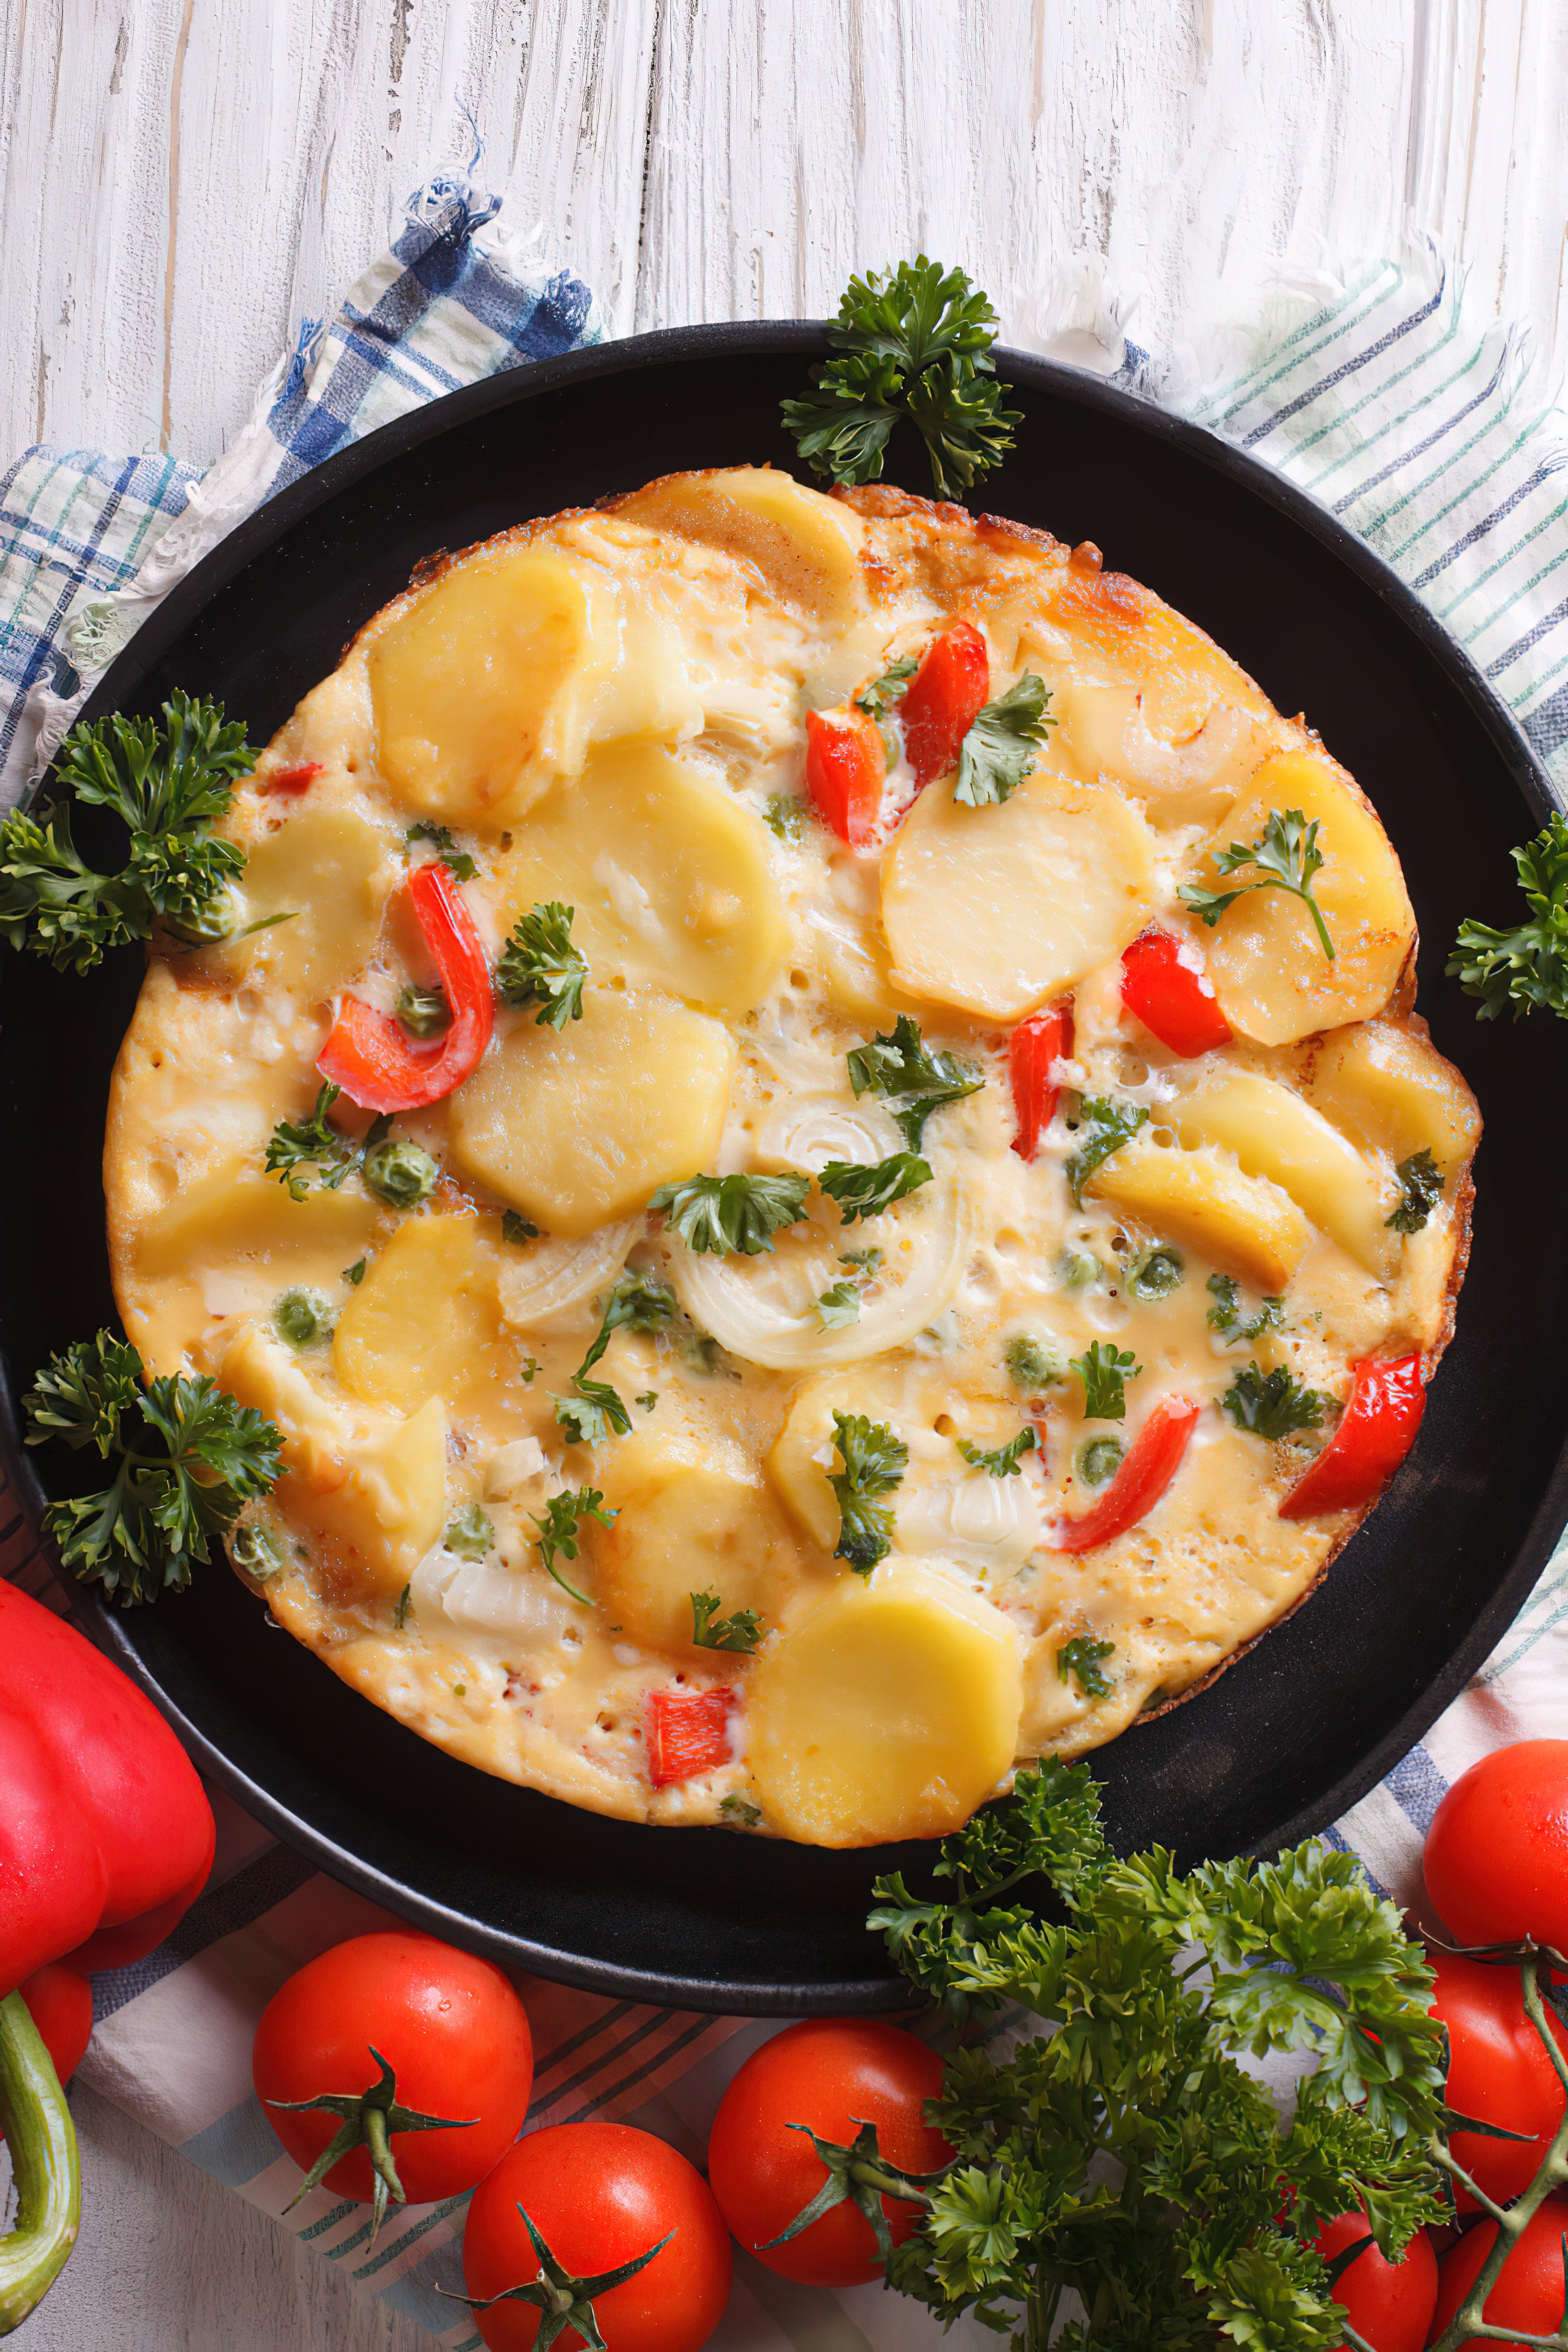 Rezept des Tages Ei Kartoffel Frühstück — Gigas Nutrition